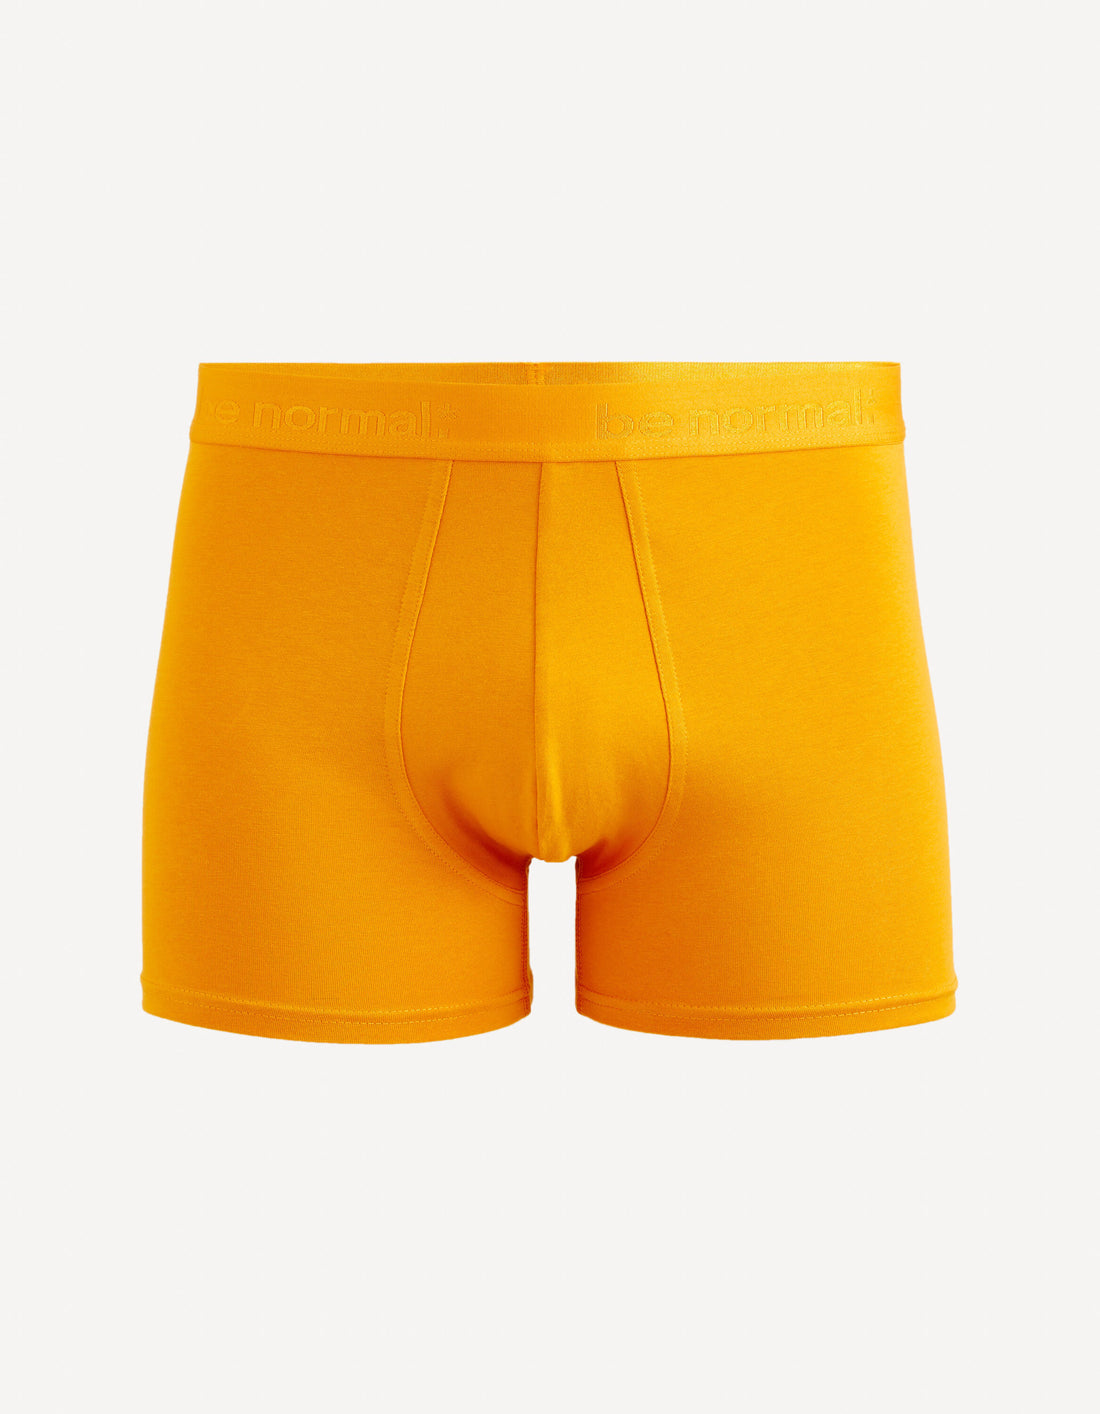 Stretch Cotton Boxer Shorts - Yellow_BINORMAL_SUN YELLOW 01_01